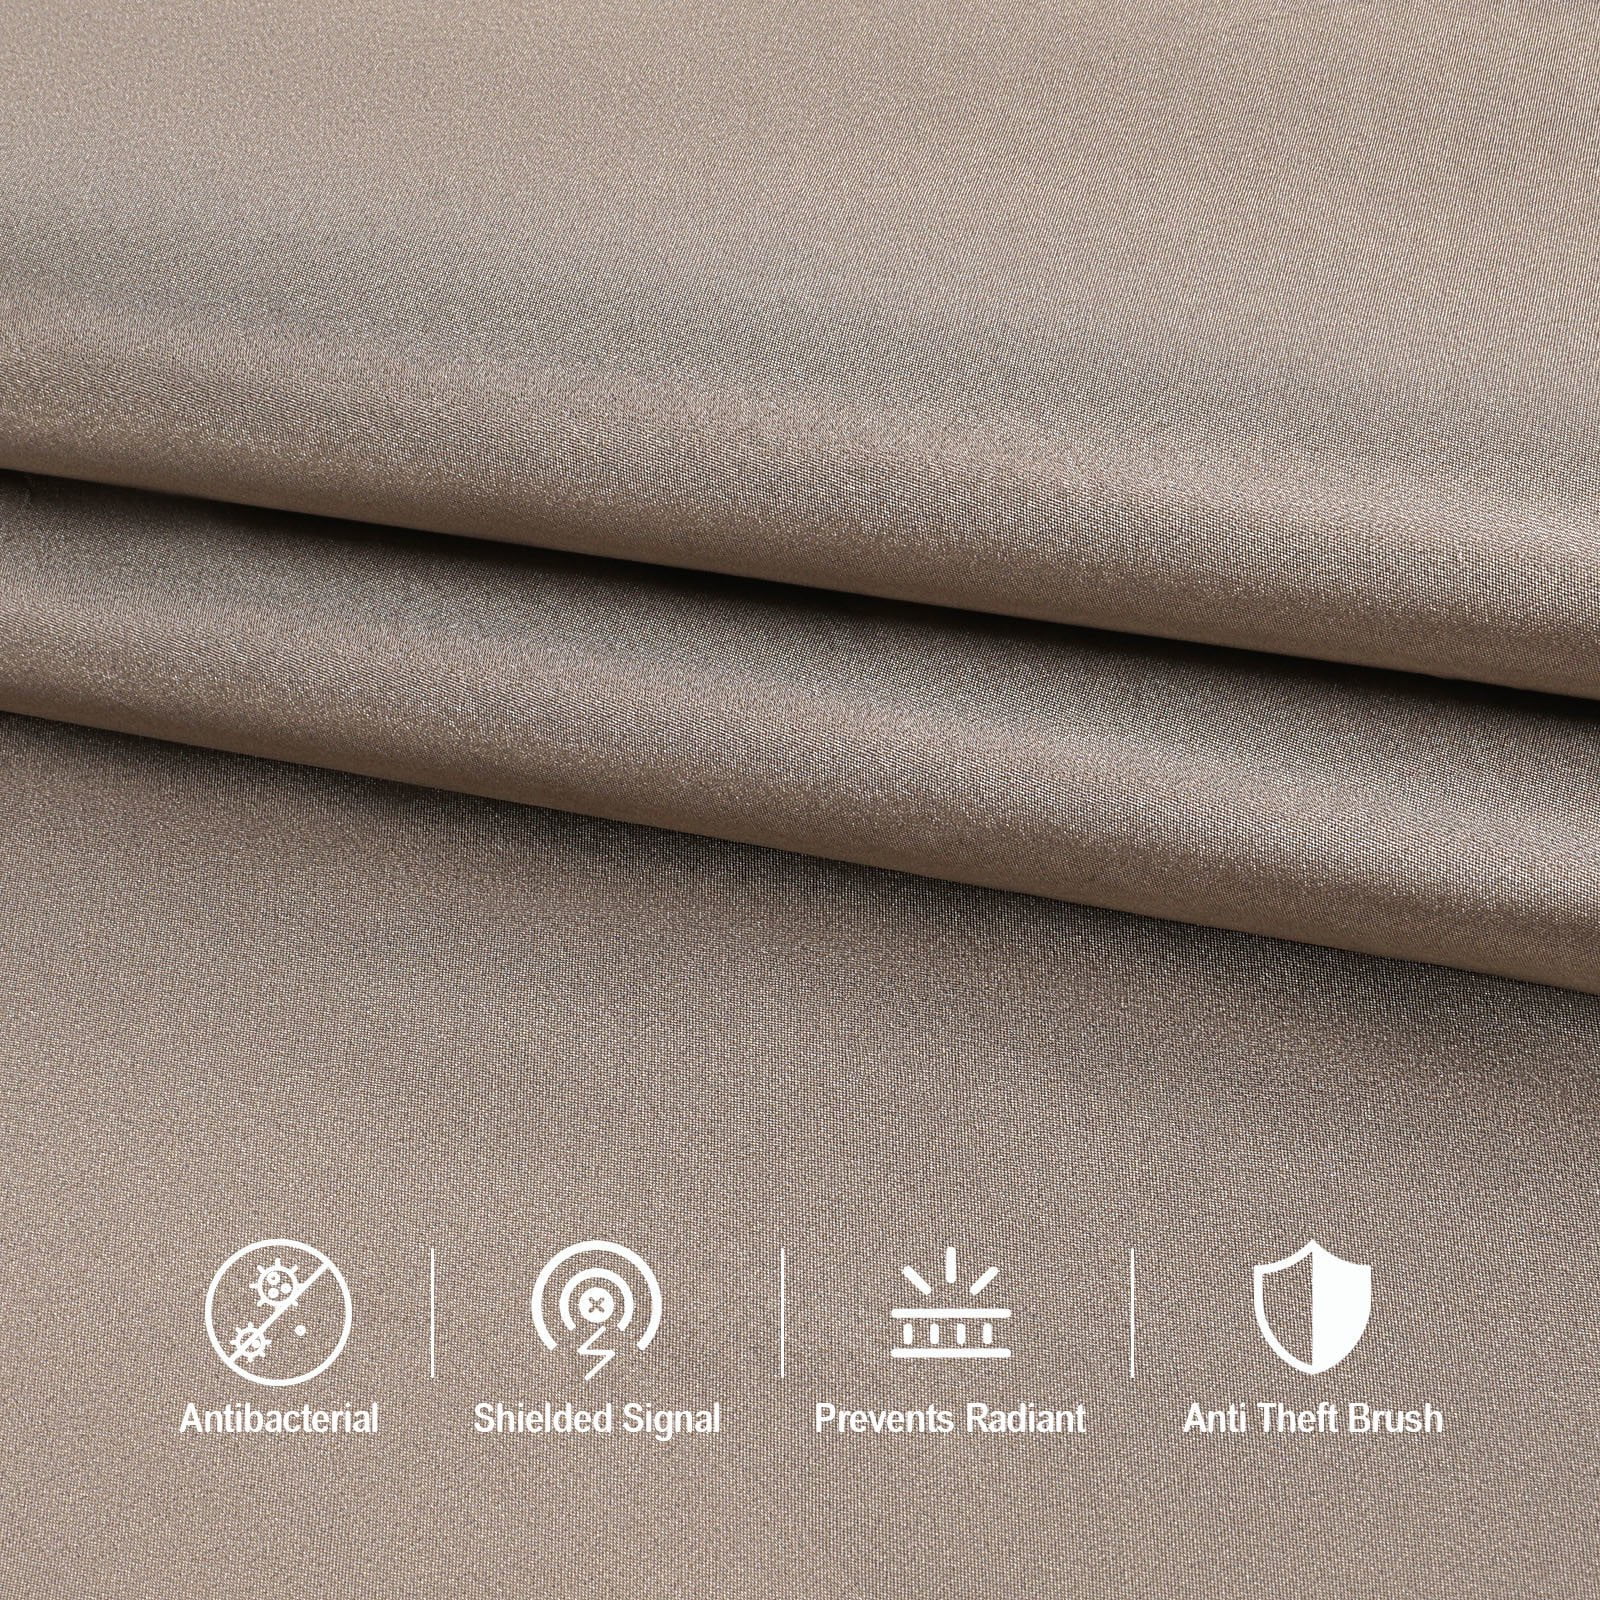 China Factory EMF Protection Fabric, Faraday Fabric, EMI, RF & RFID  Shielding Nickel Copper Fabric, Cell, WiFi & Bluetooth Blocking Shielding  Fabric 108.5x106.5x0.01cm in bulk online 